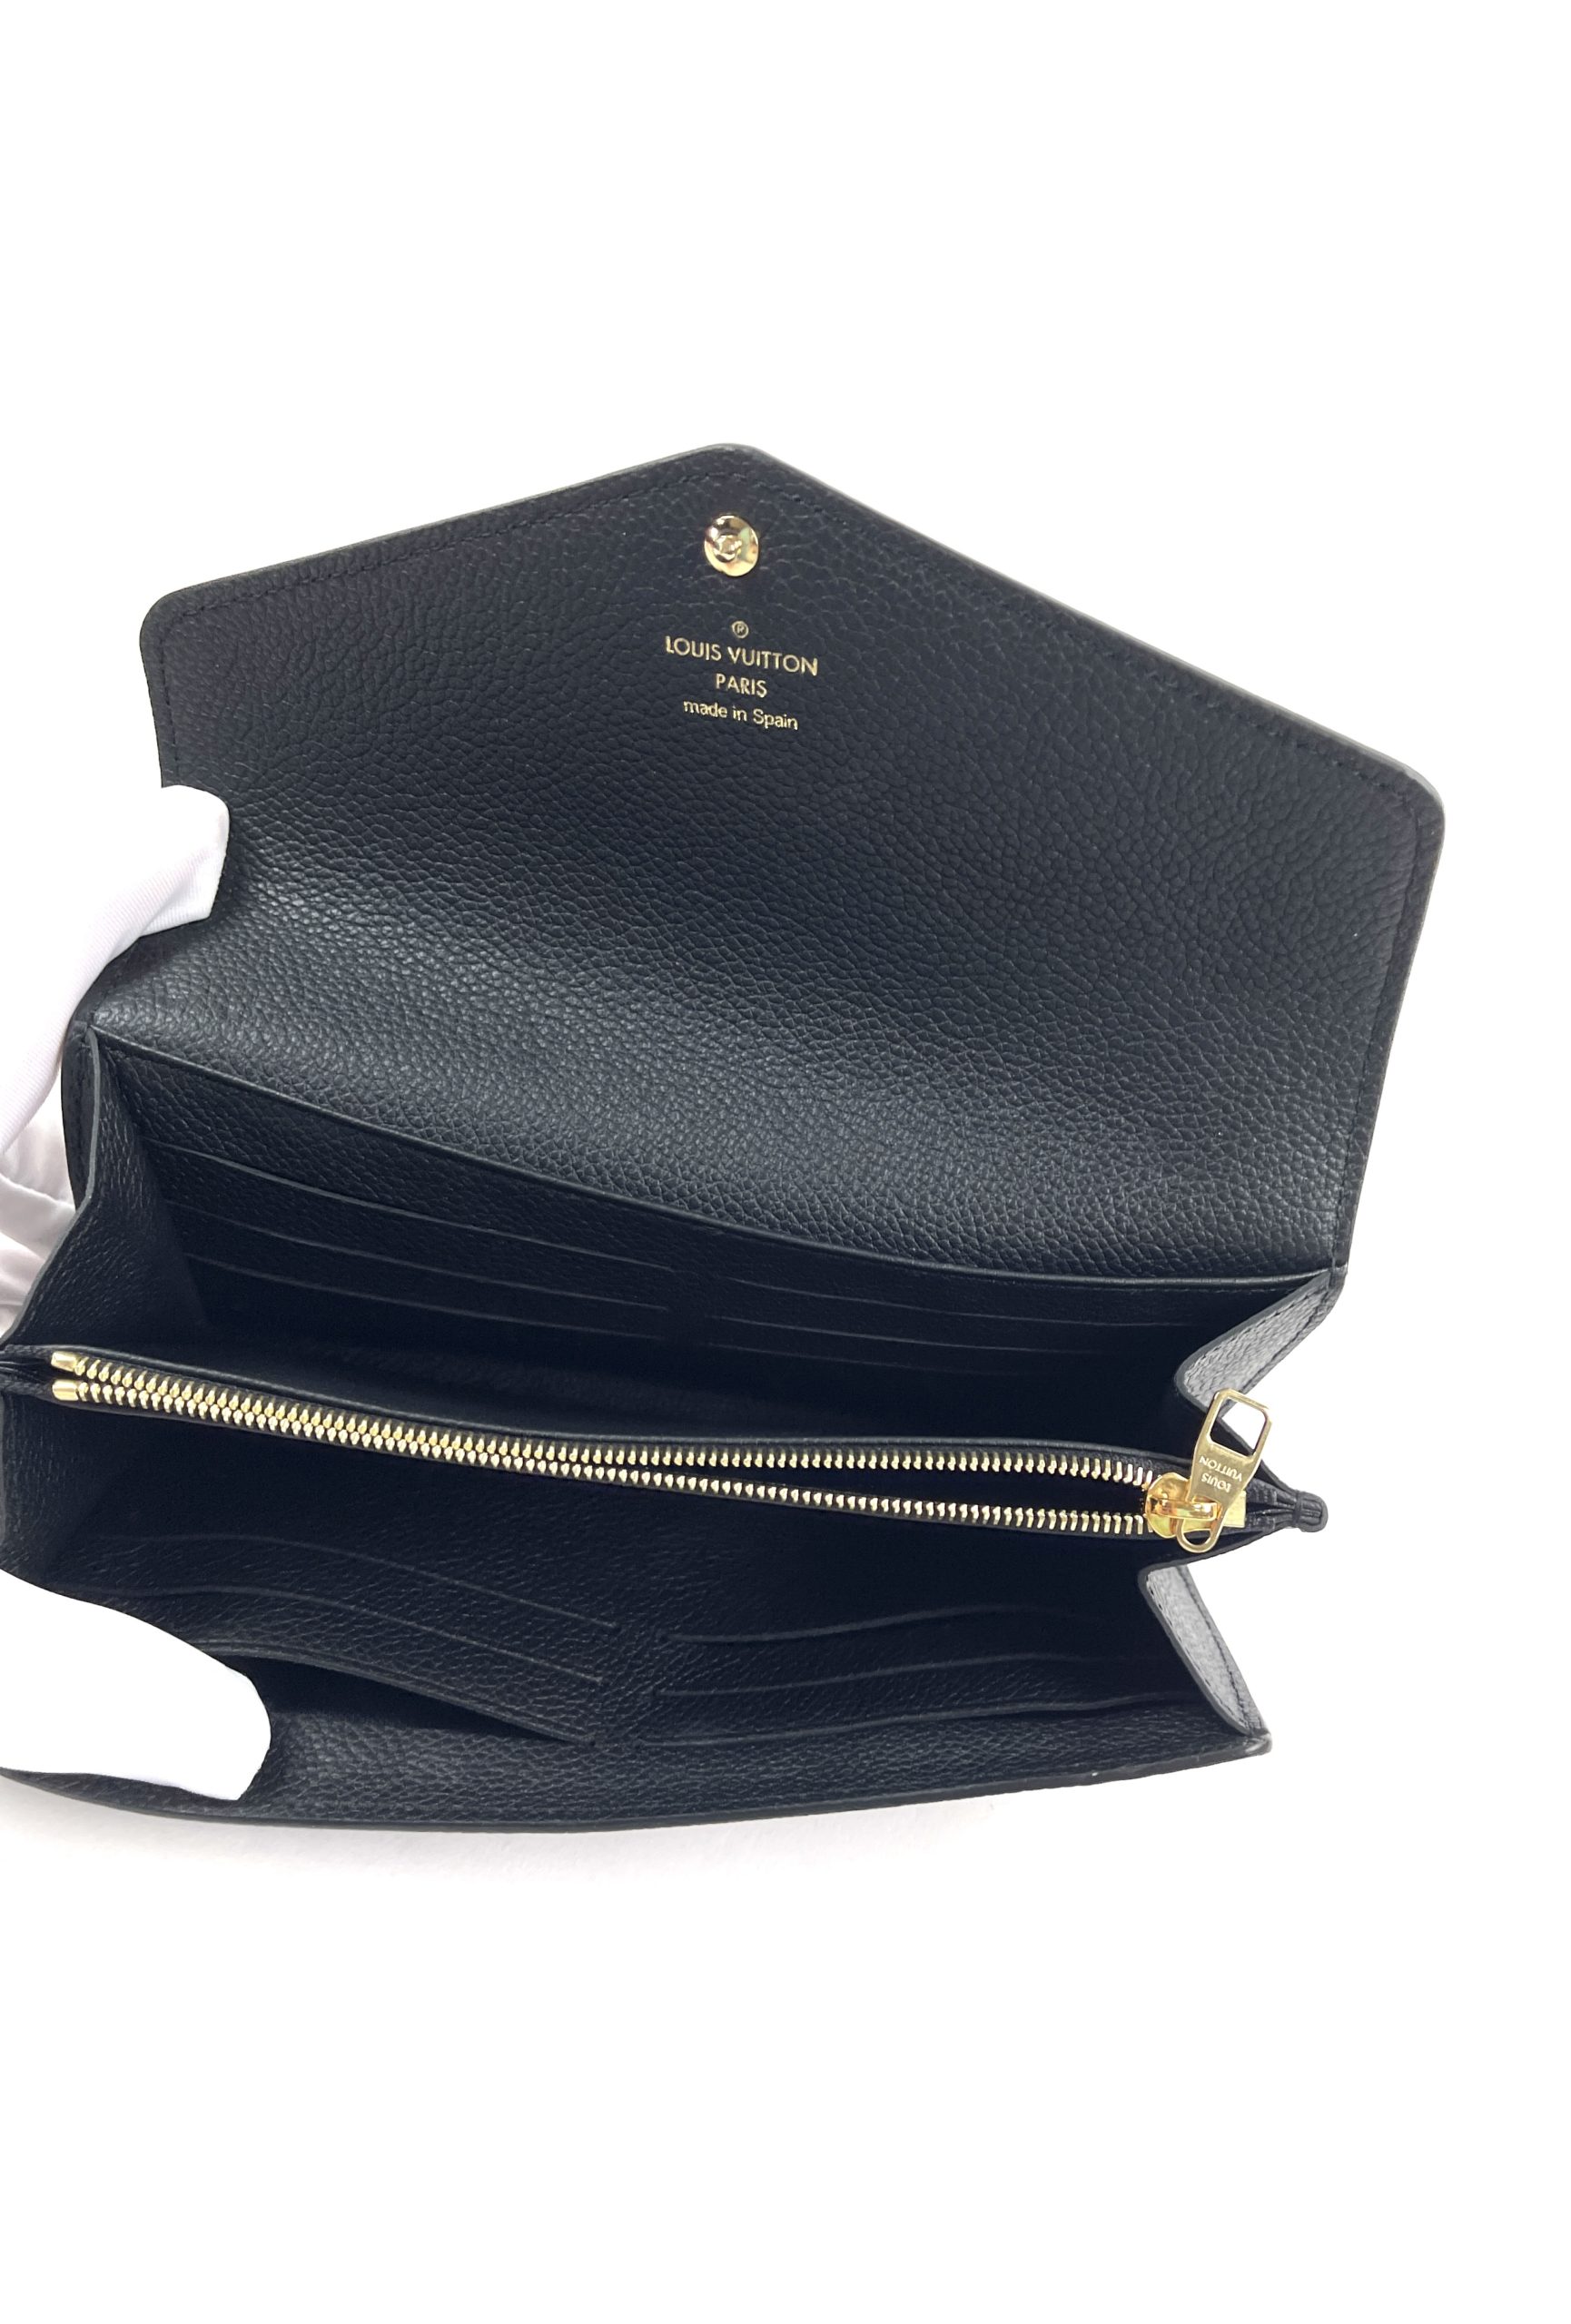 Louis Vuitton Sarah Wallet Black Empreinte - THE PURSE AFFAIR